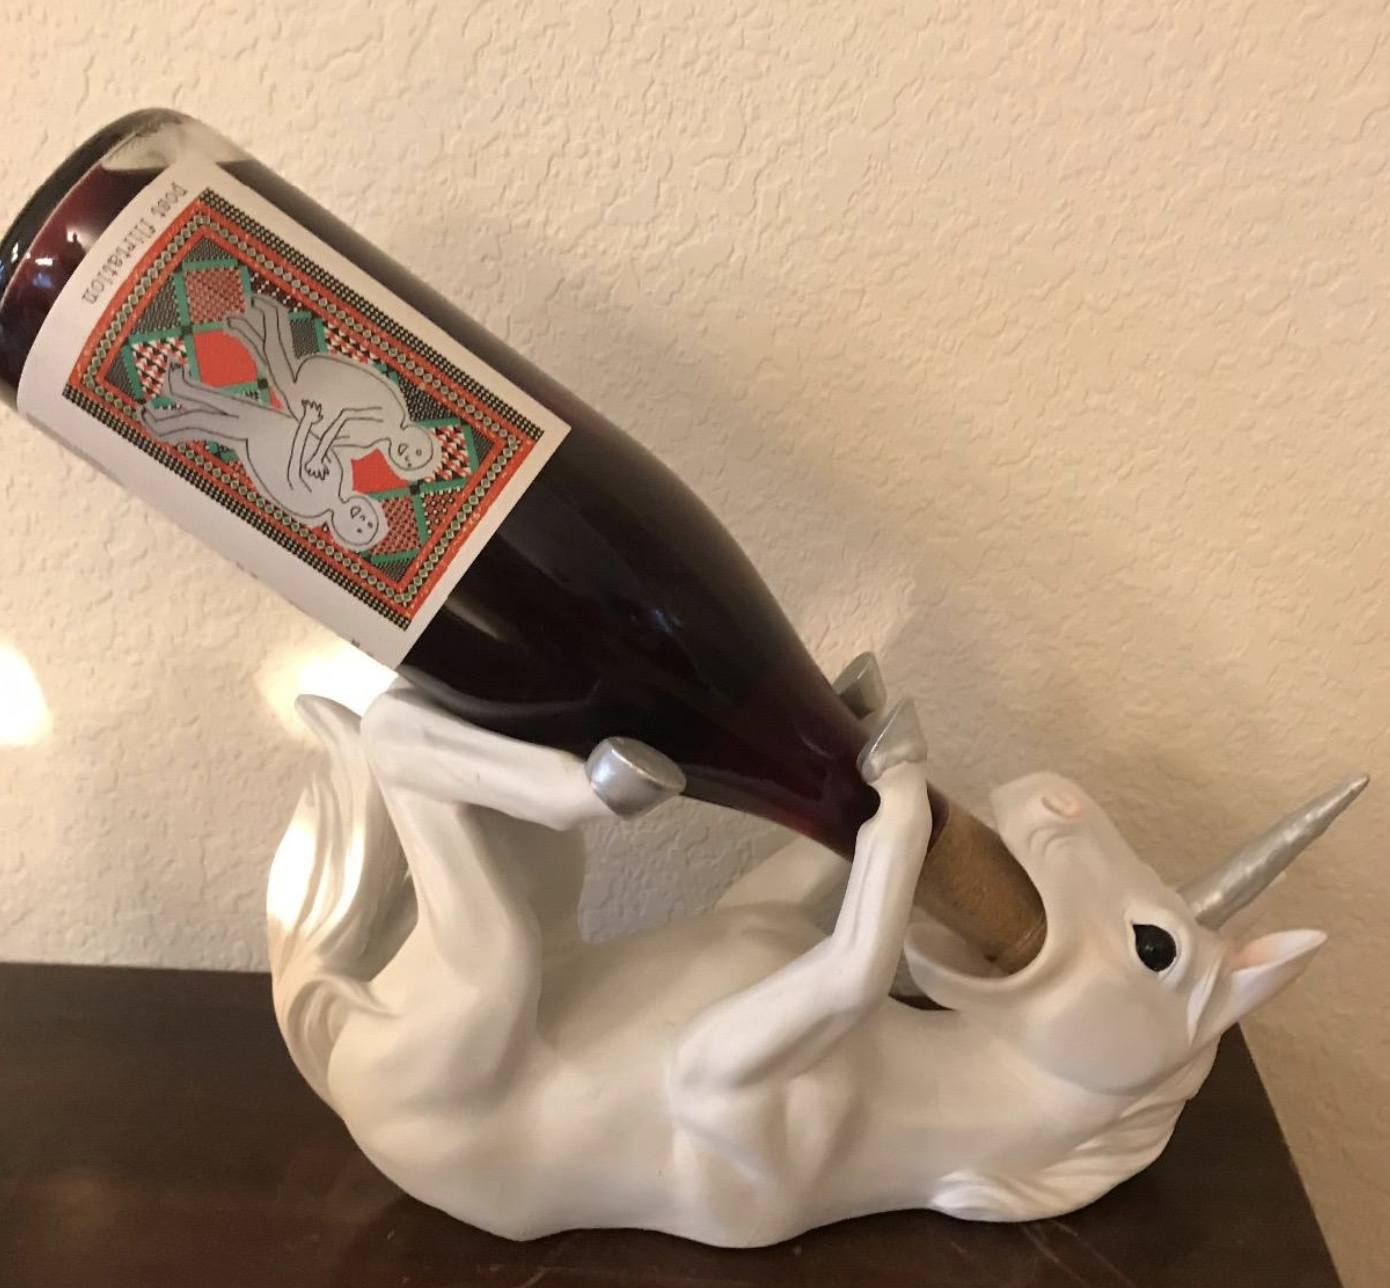 the unicorn bottle holder holding a bottle of wine